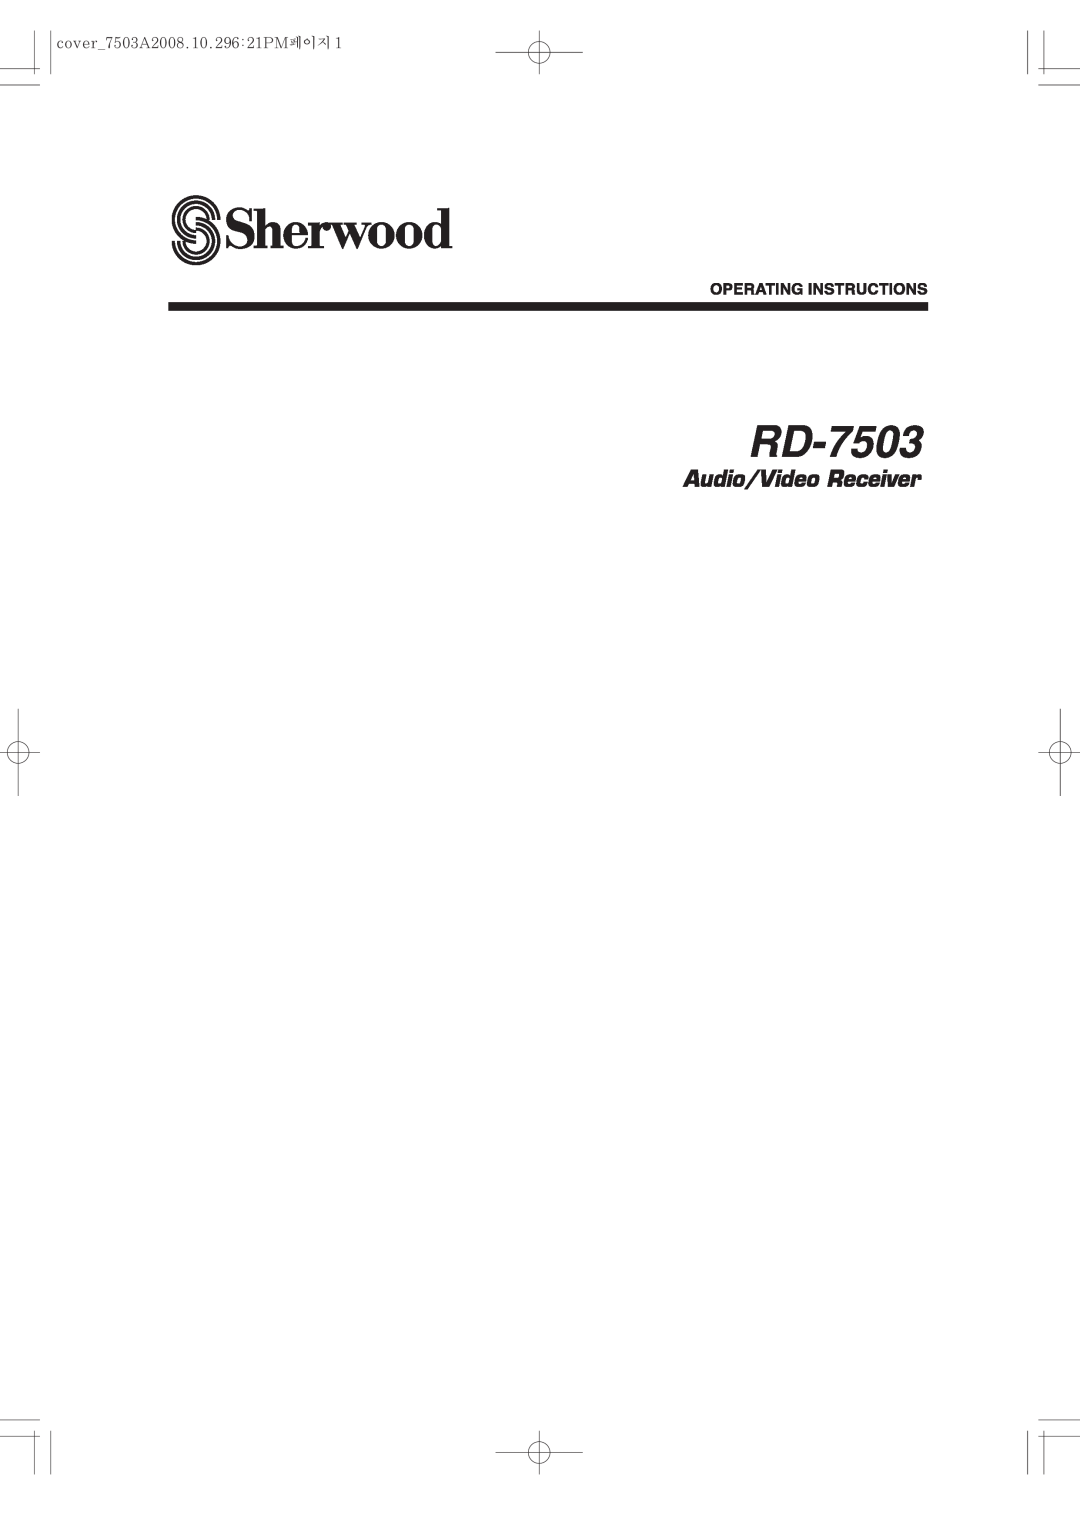 Sherwood RD-7503 manual cover 7503A2008.10.296 21PM페이지 